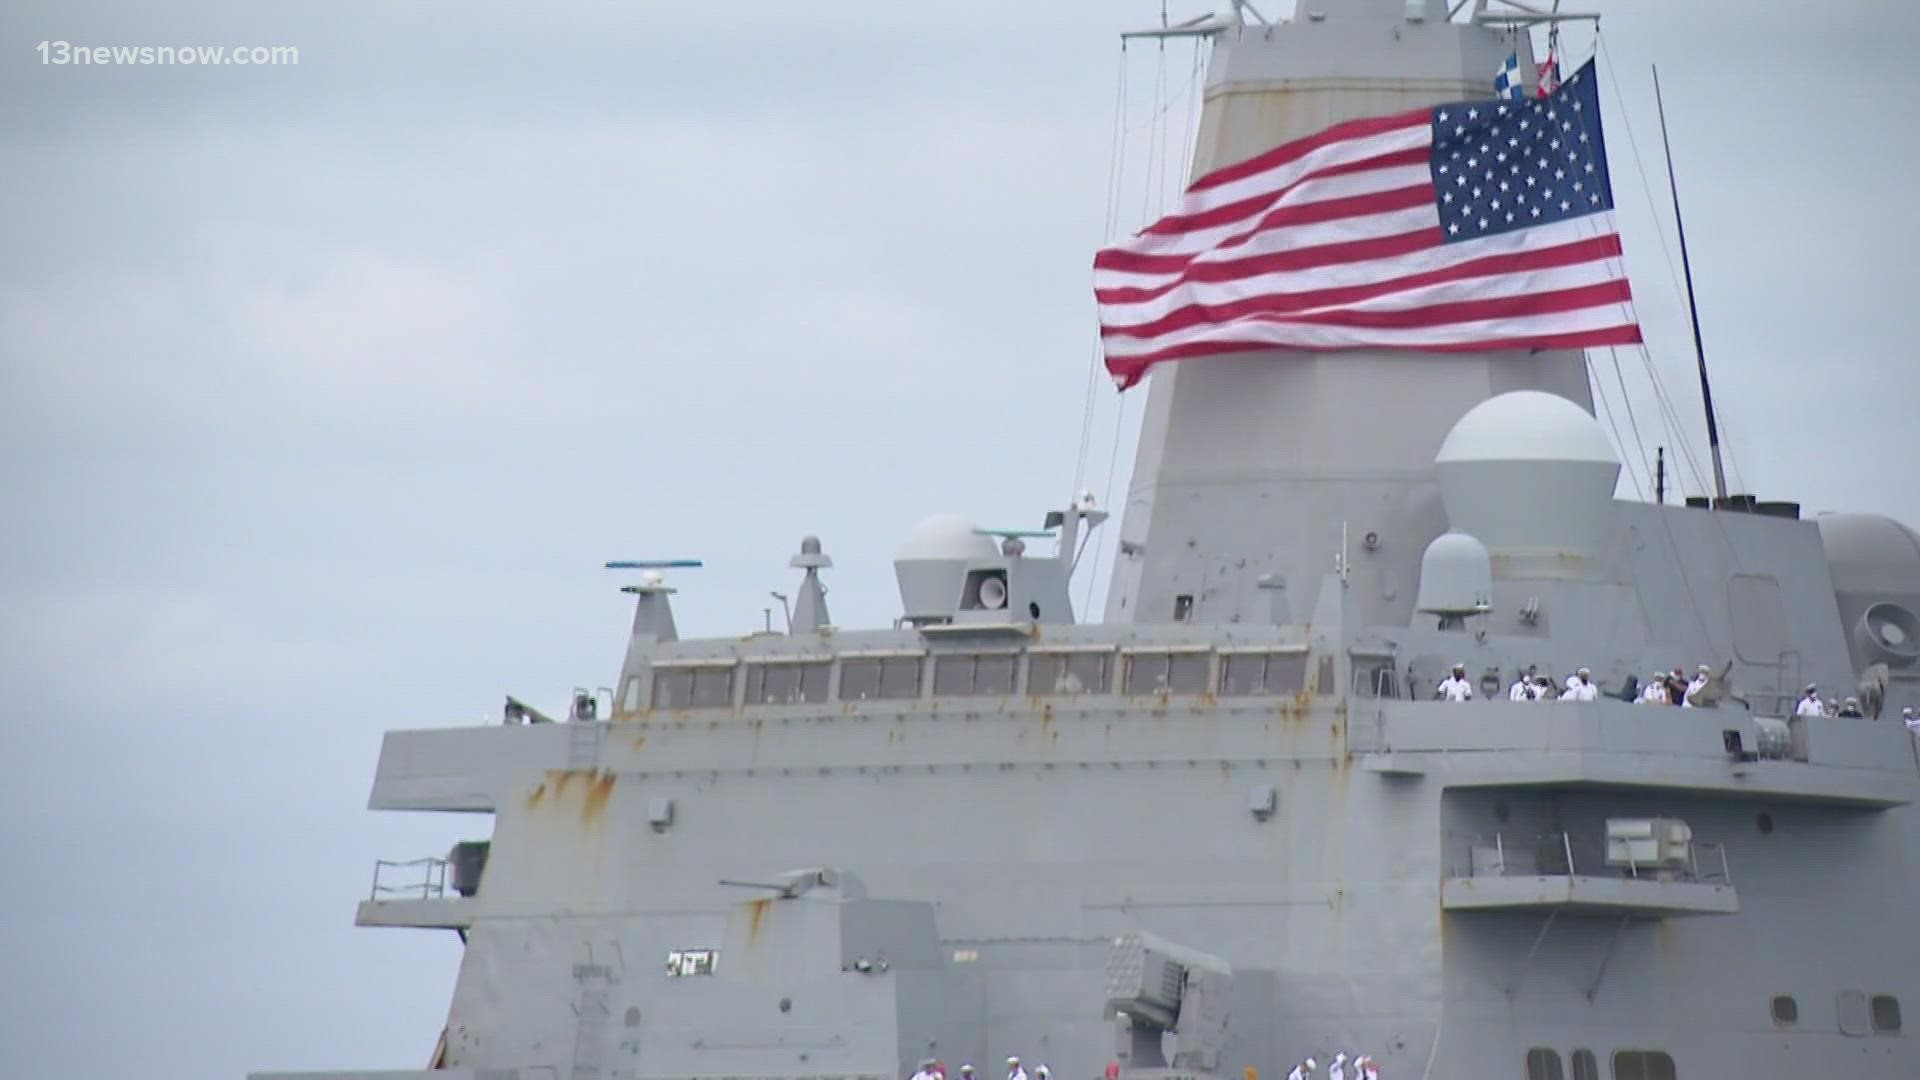 The San Antonio-class amphibious transport dock ship USS San Antonio brought home hundreds of sailors.